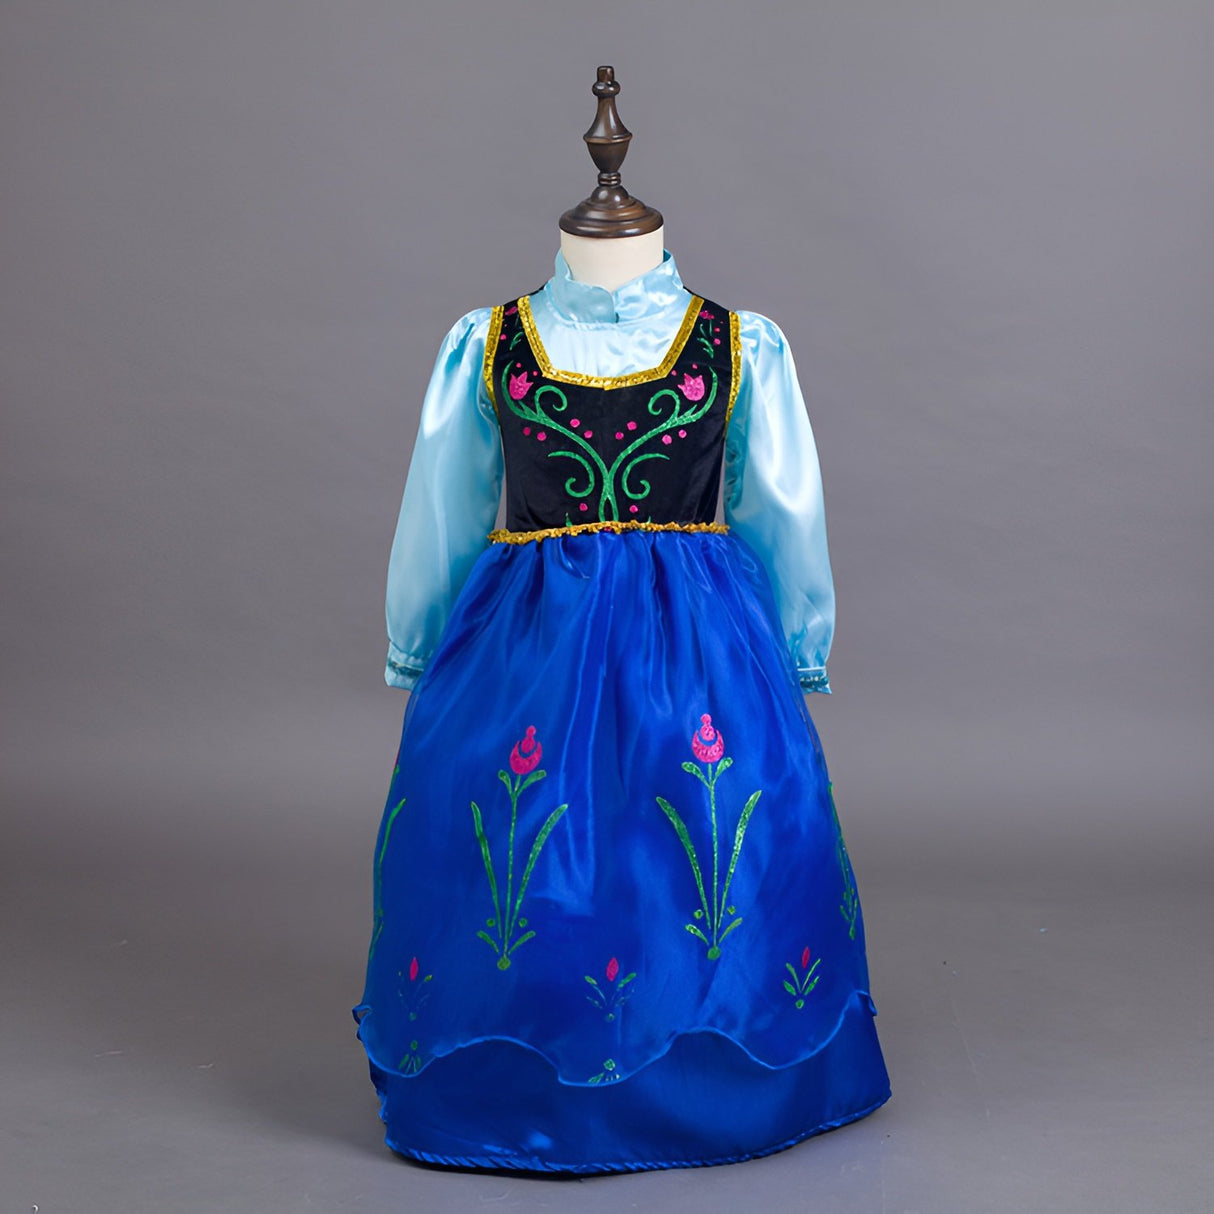 Frozen Anna Princess Costume